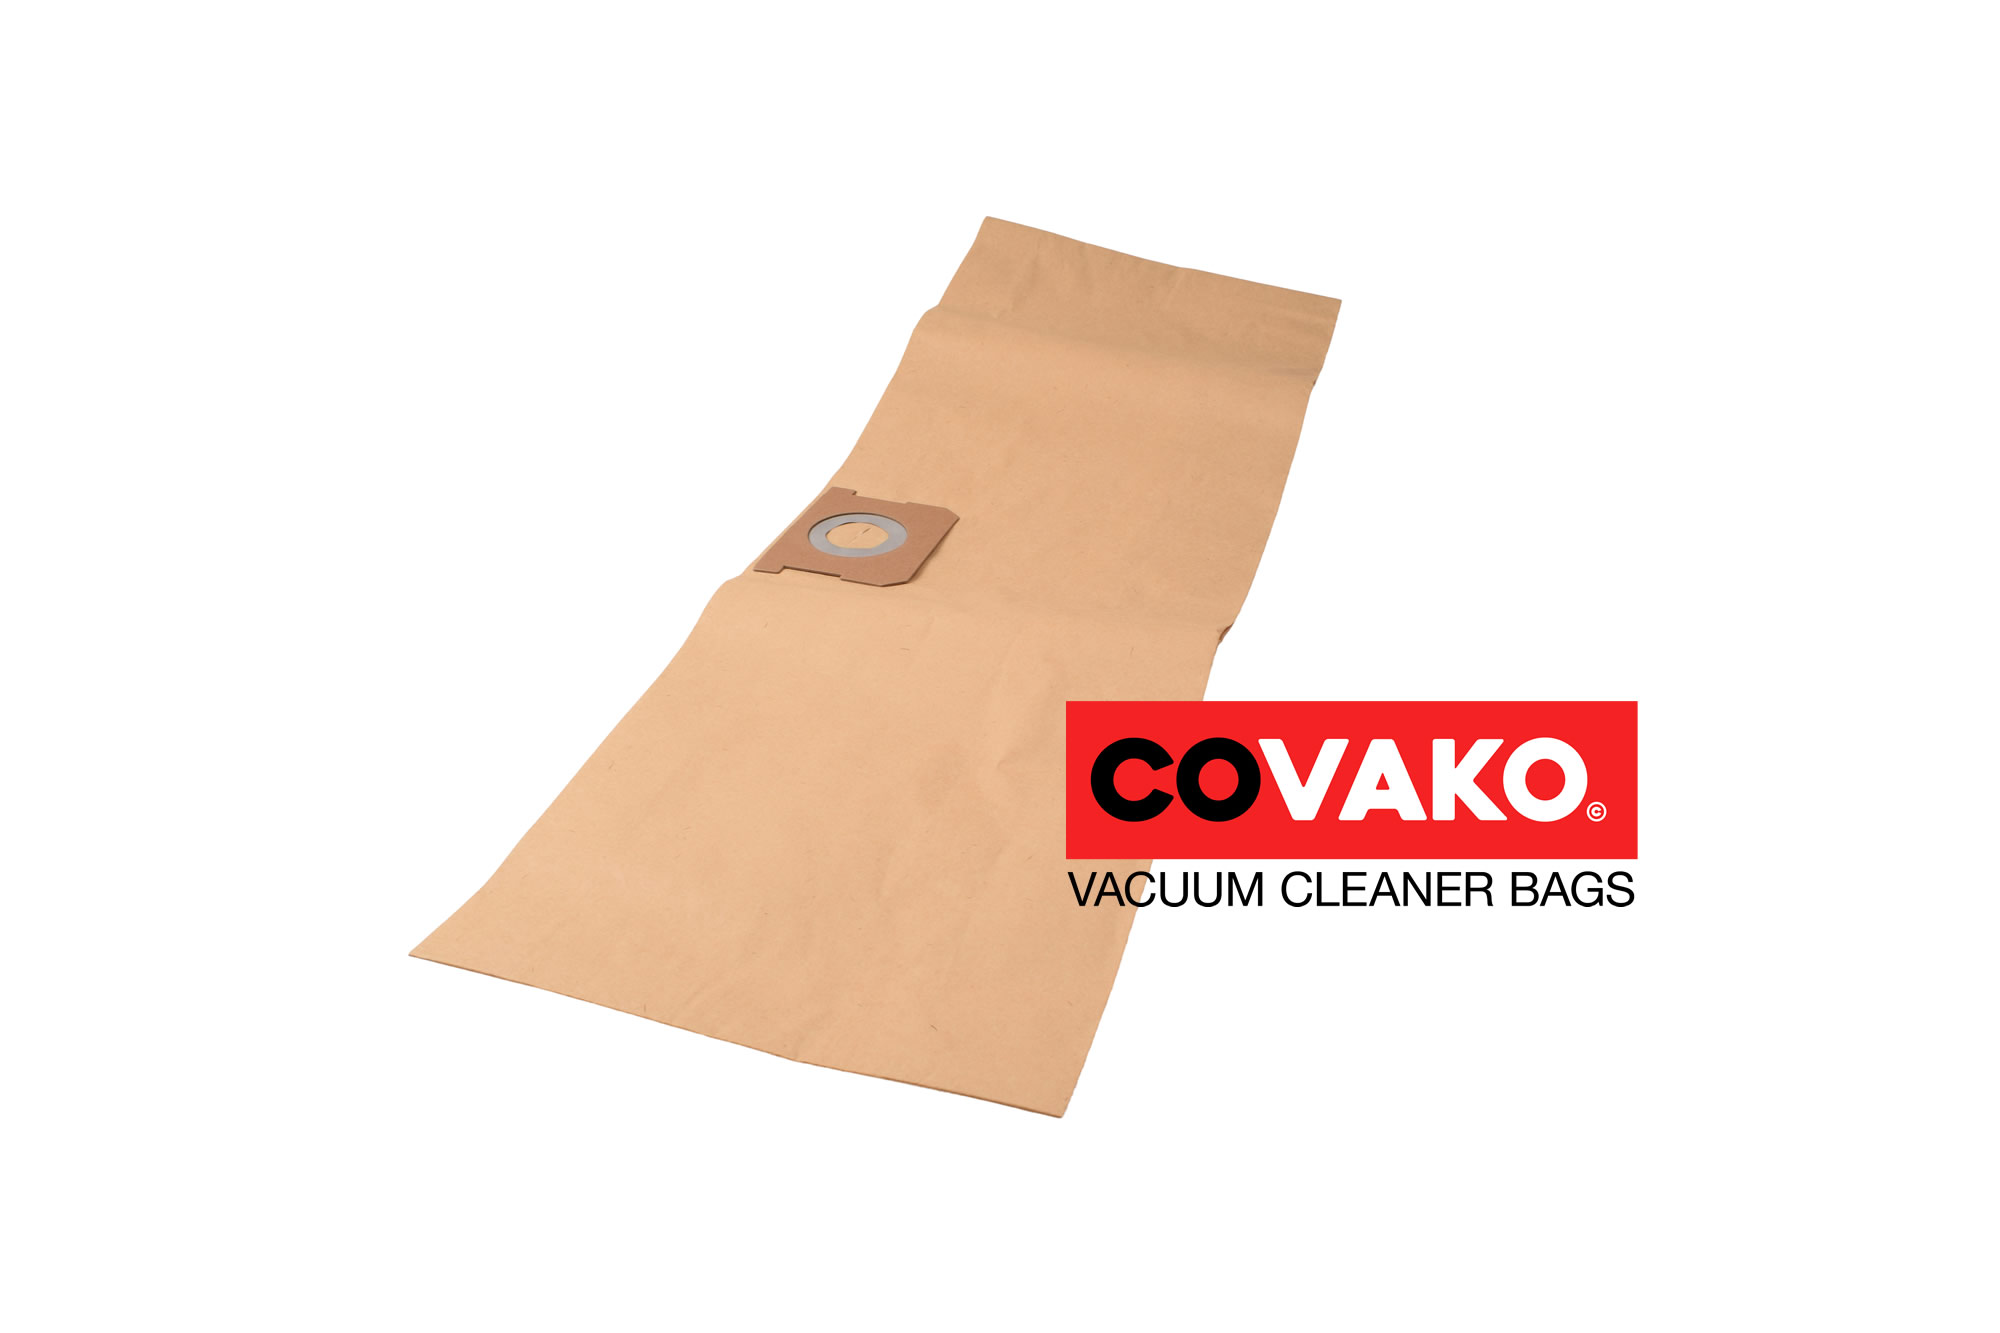 Obi NTS 20/1300 / Paper - Obi vacuum cleaner bags